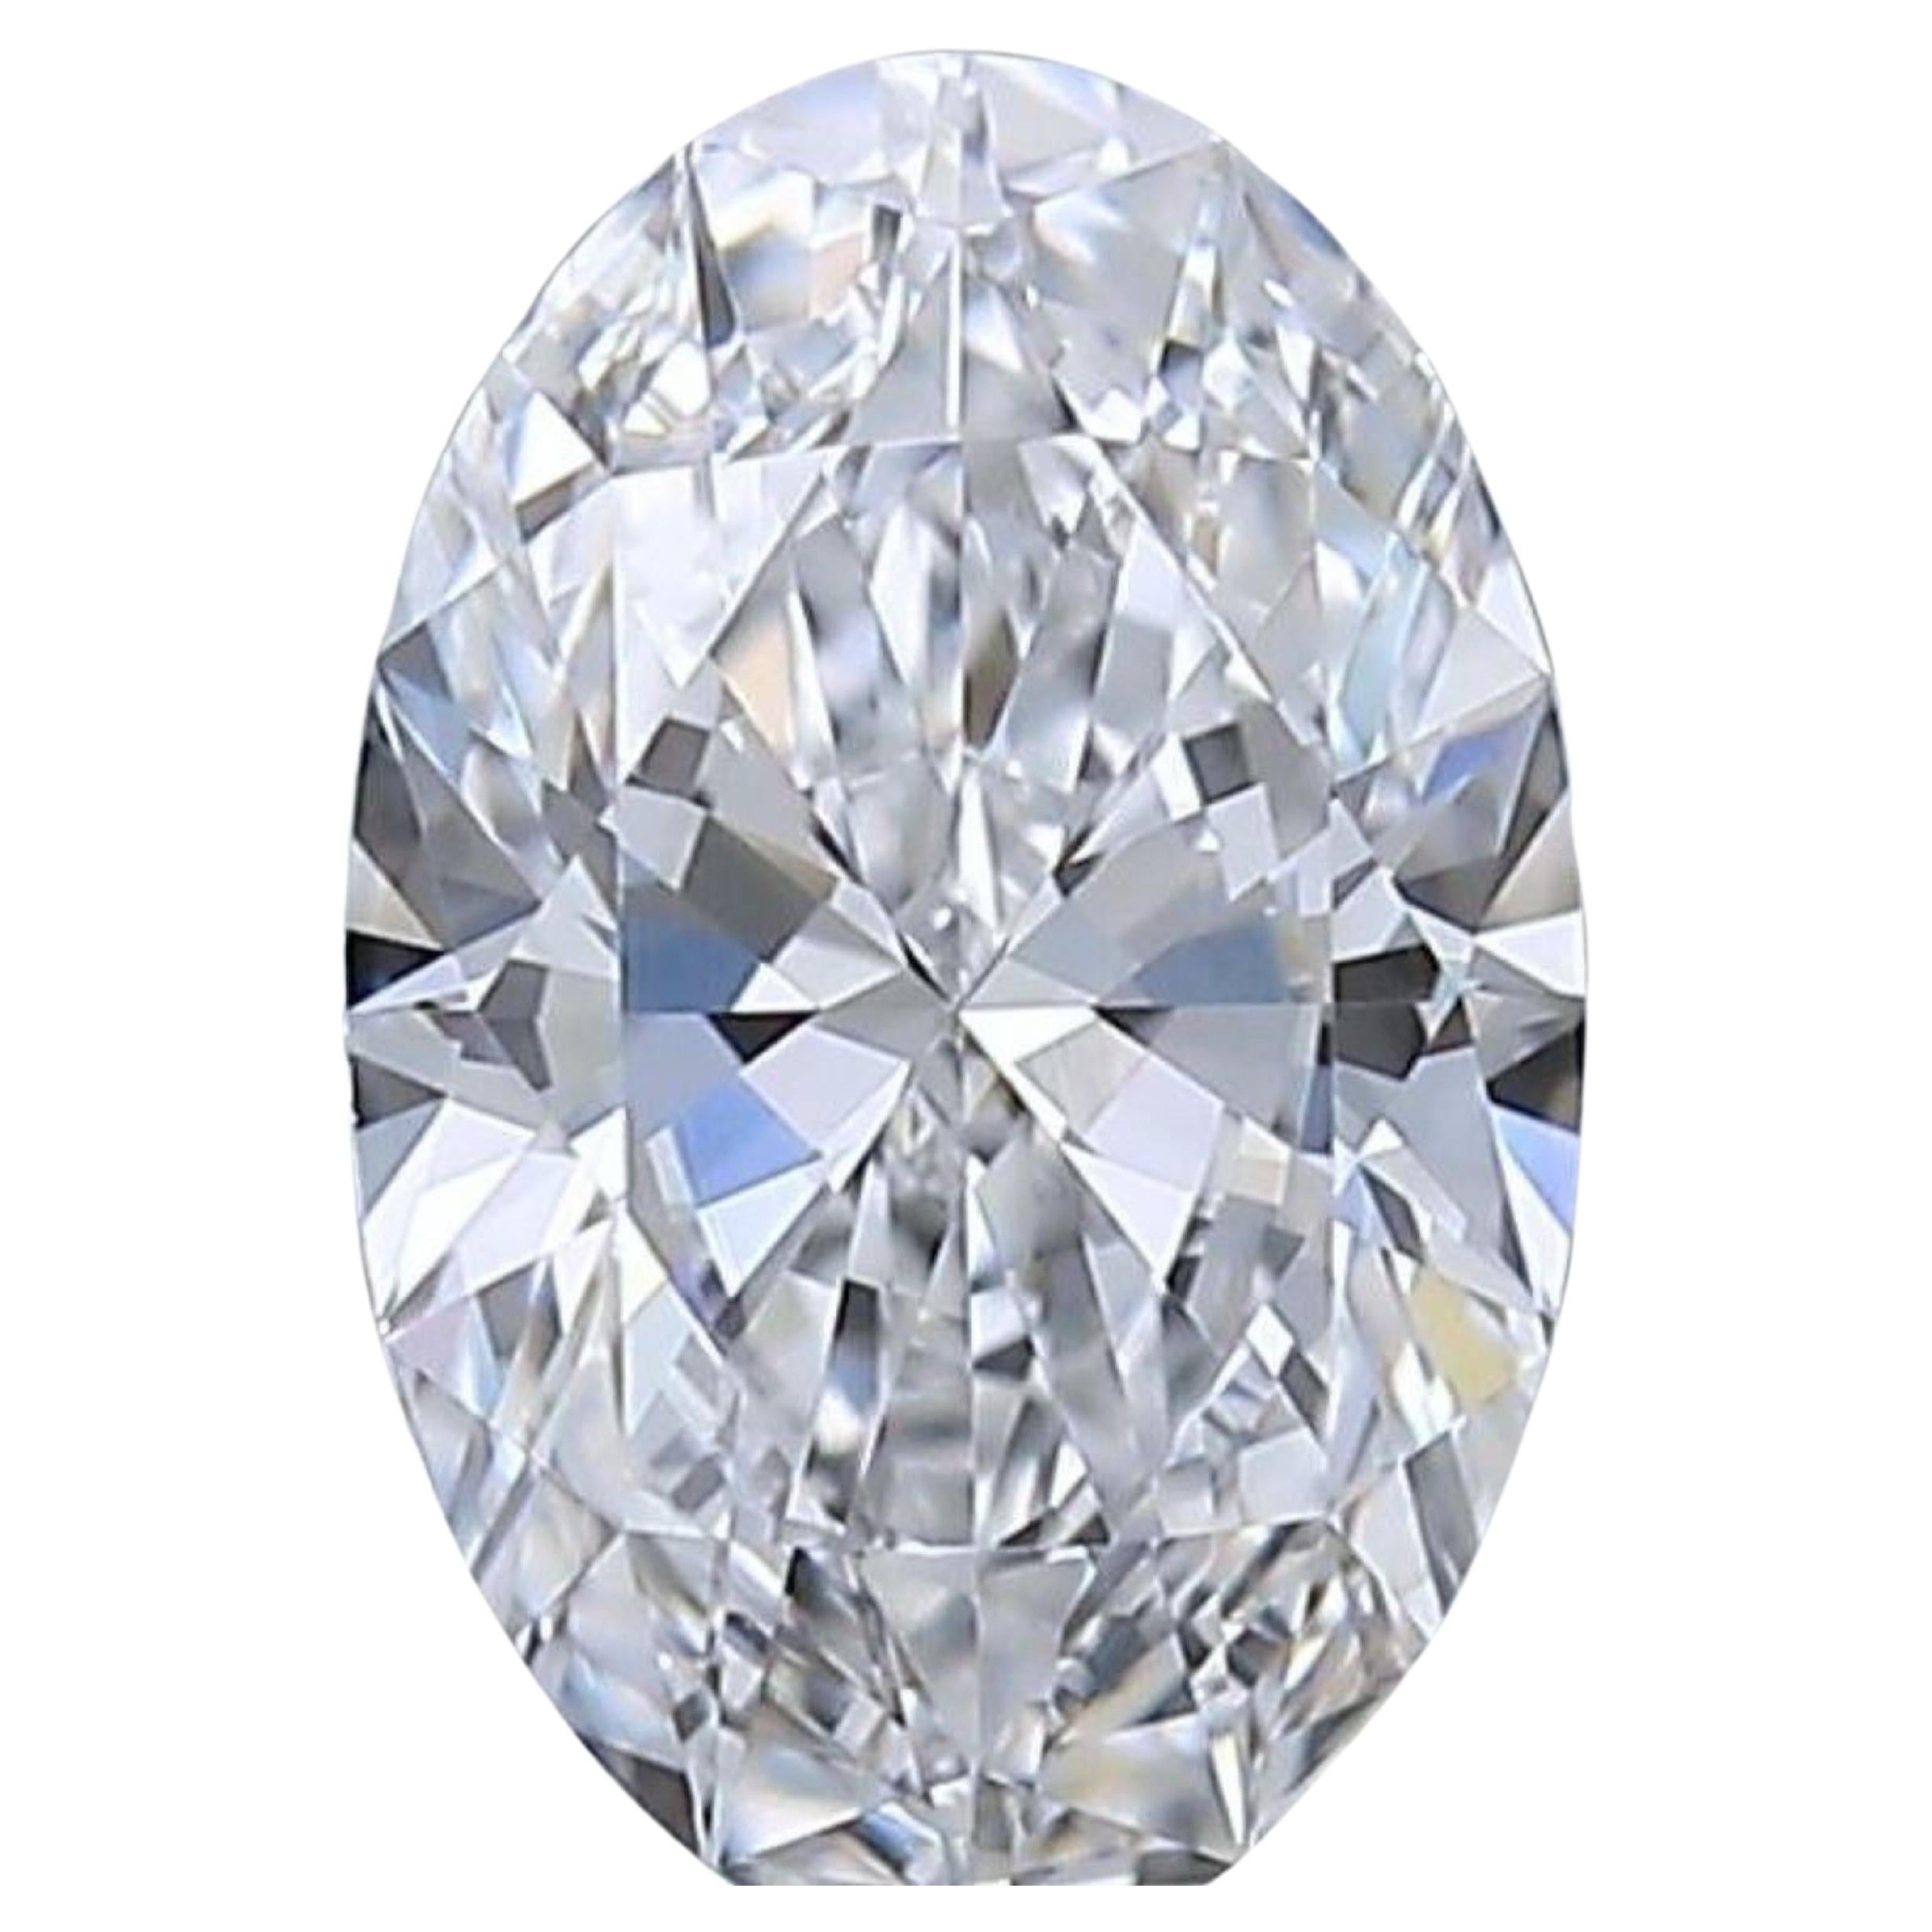 1pc. Brilliante .70 Diamant naturel de taille ovale et brillant